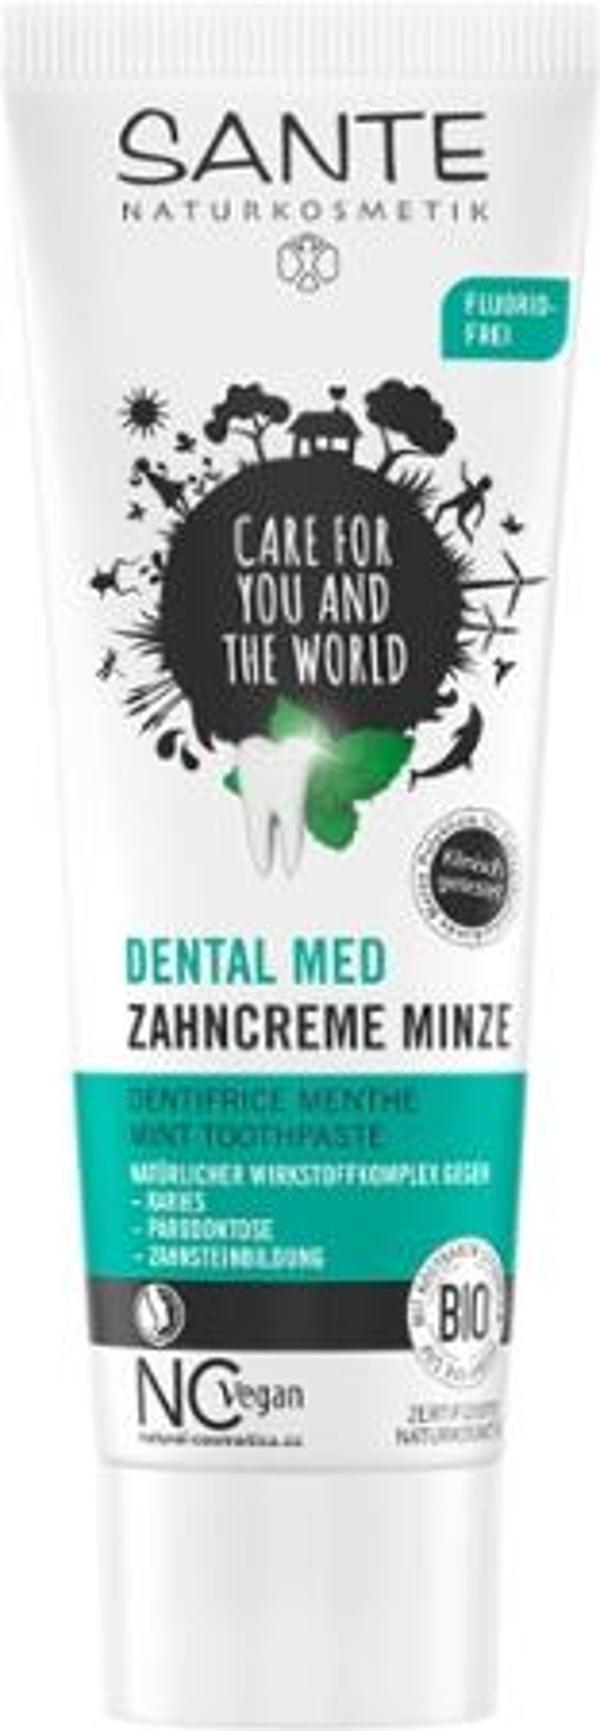 Produktfoto zu Dental Med Zahncreme Minze 75ml Sante Naturkosmetik